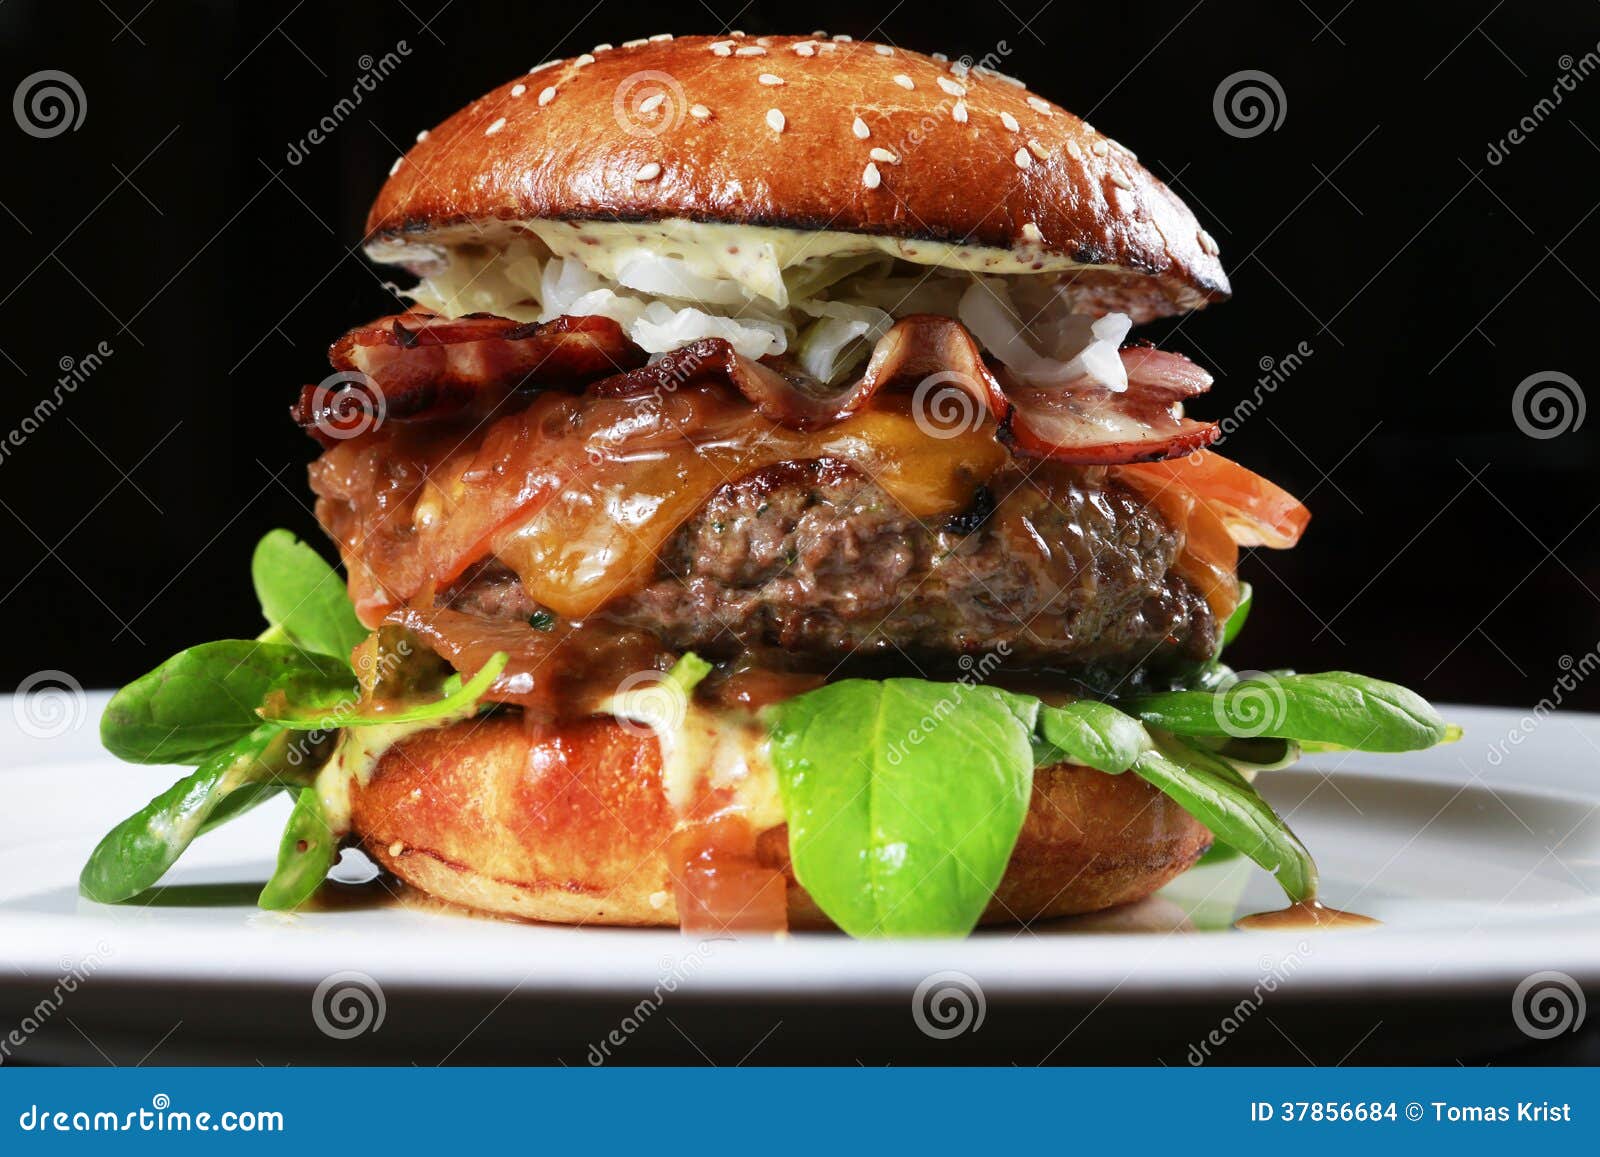 Burger stock photo. Image of plate, caloric, fastfood - 37856684